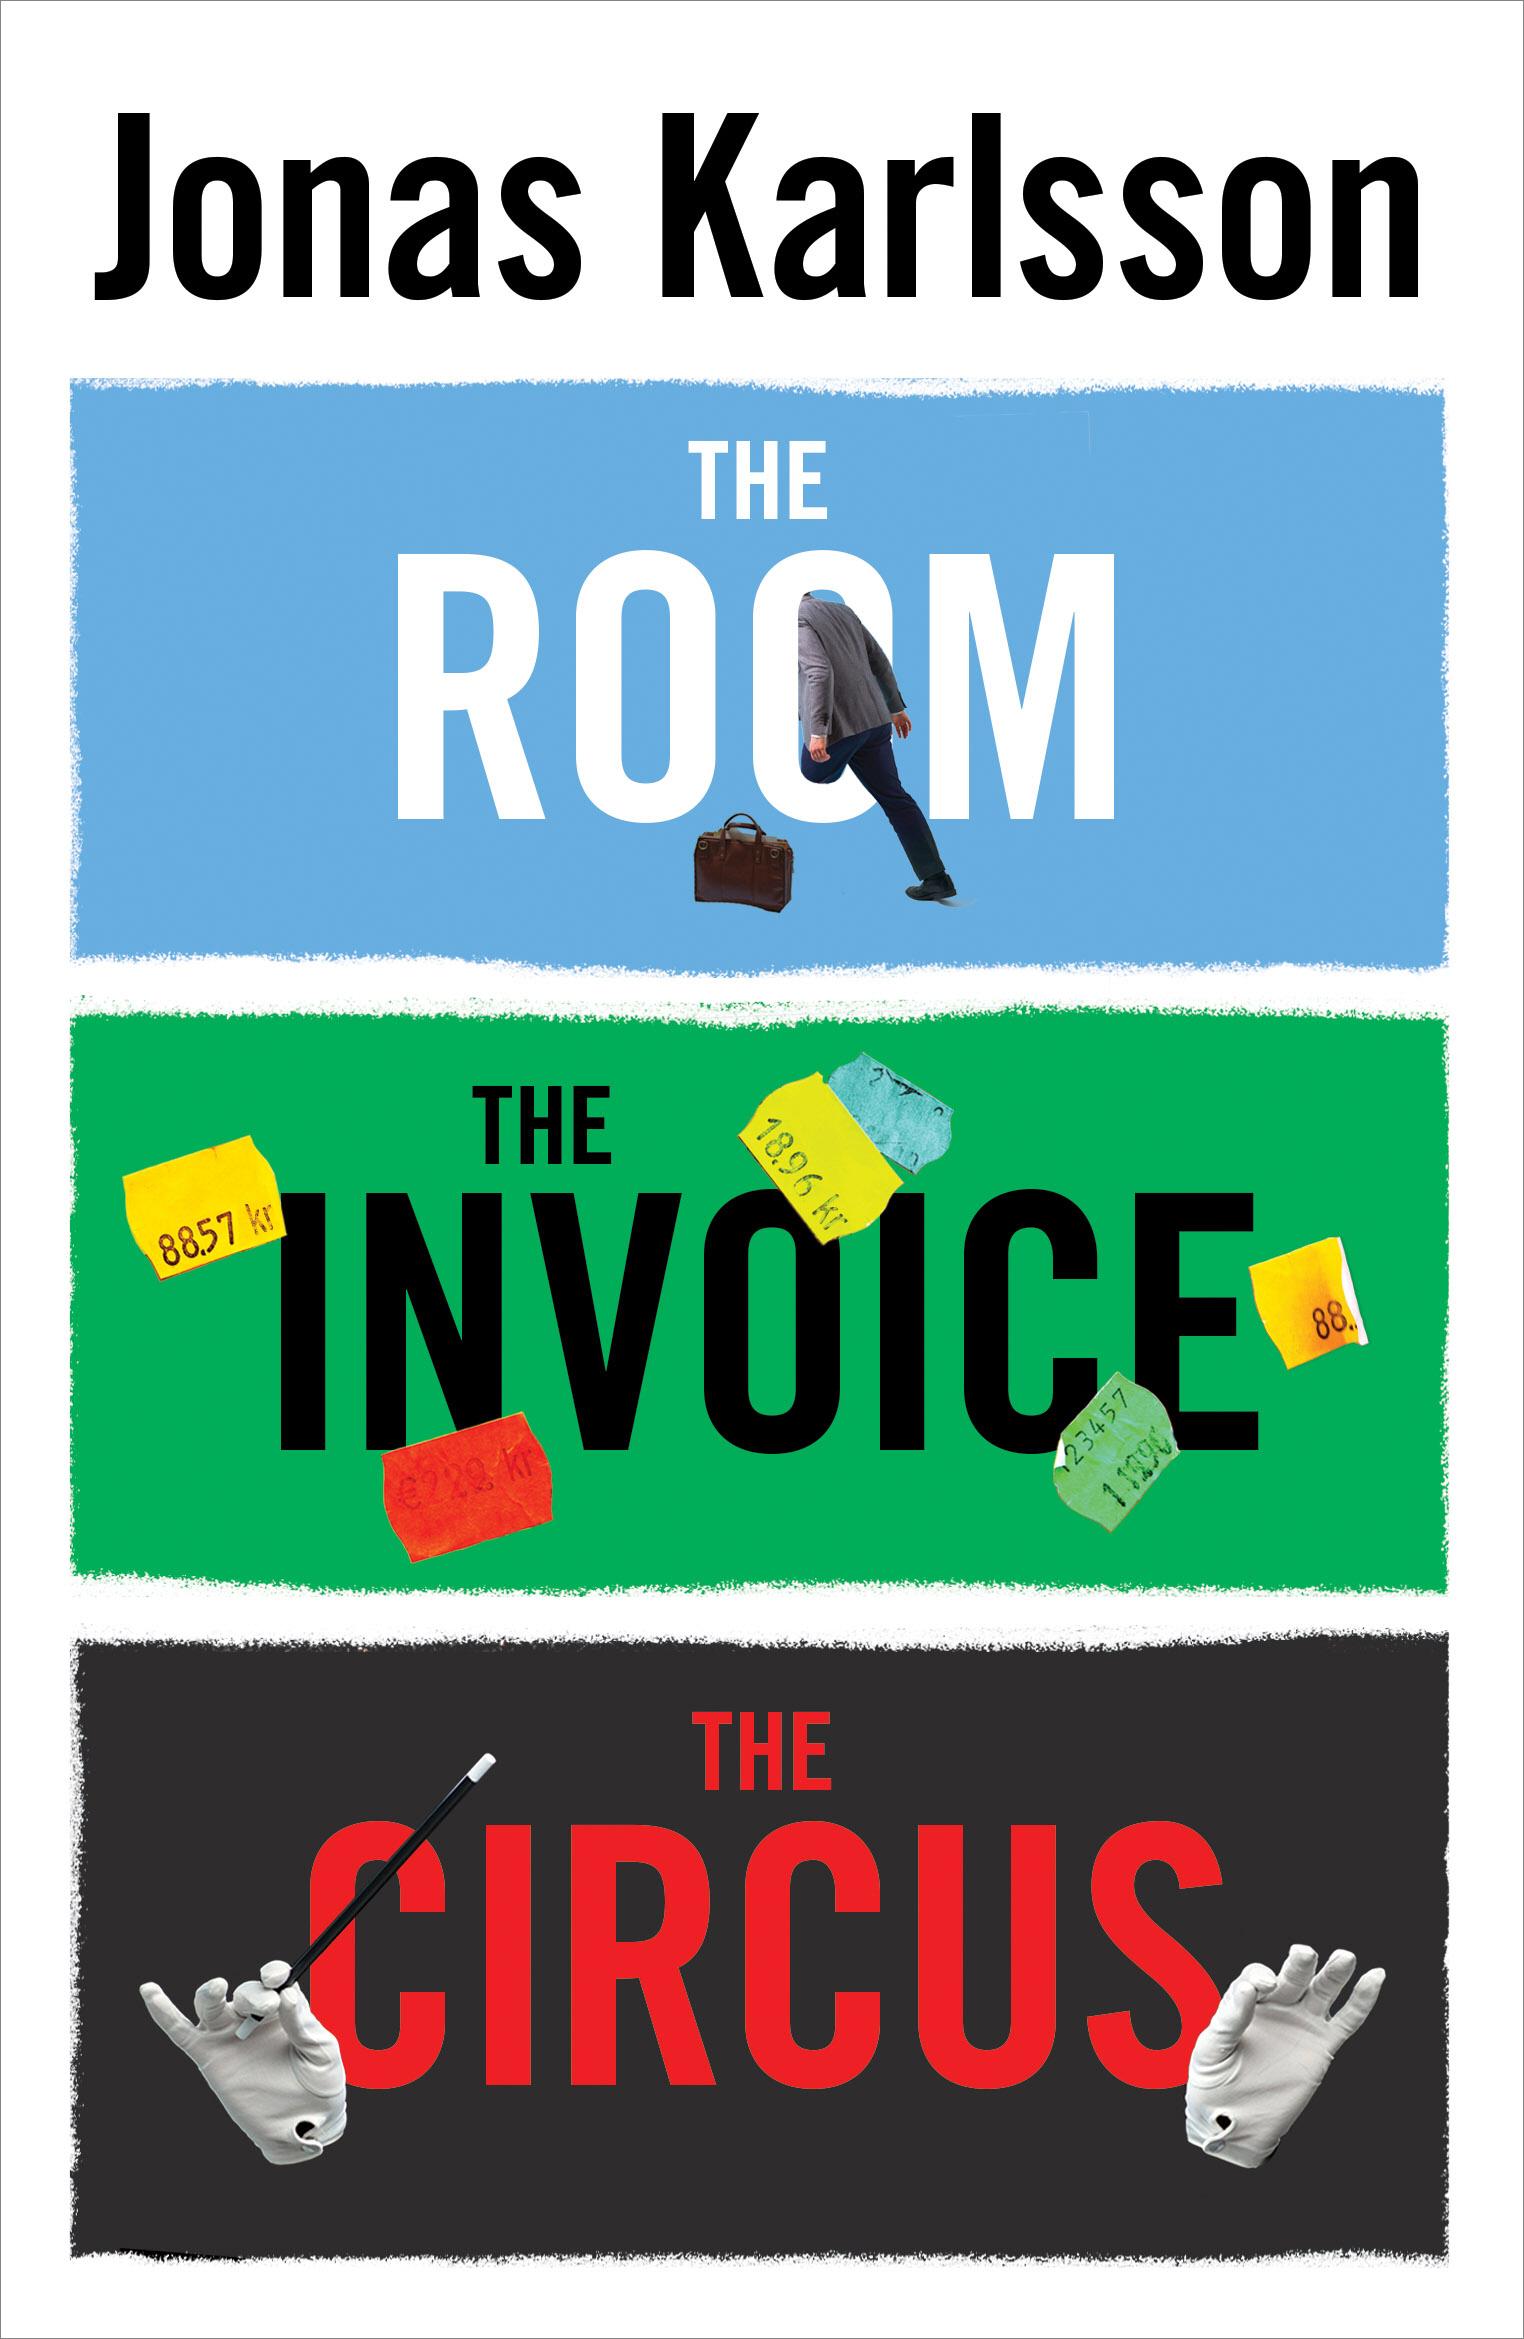 Room, The Invoice, and The Circus - Jonas Karlsson